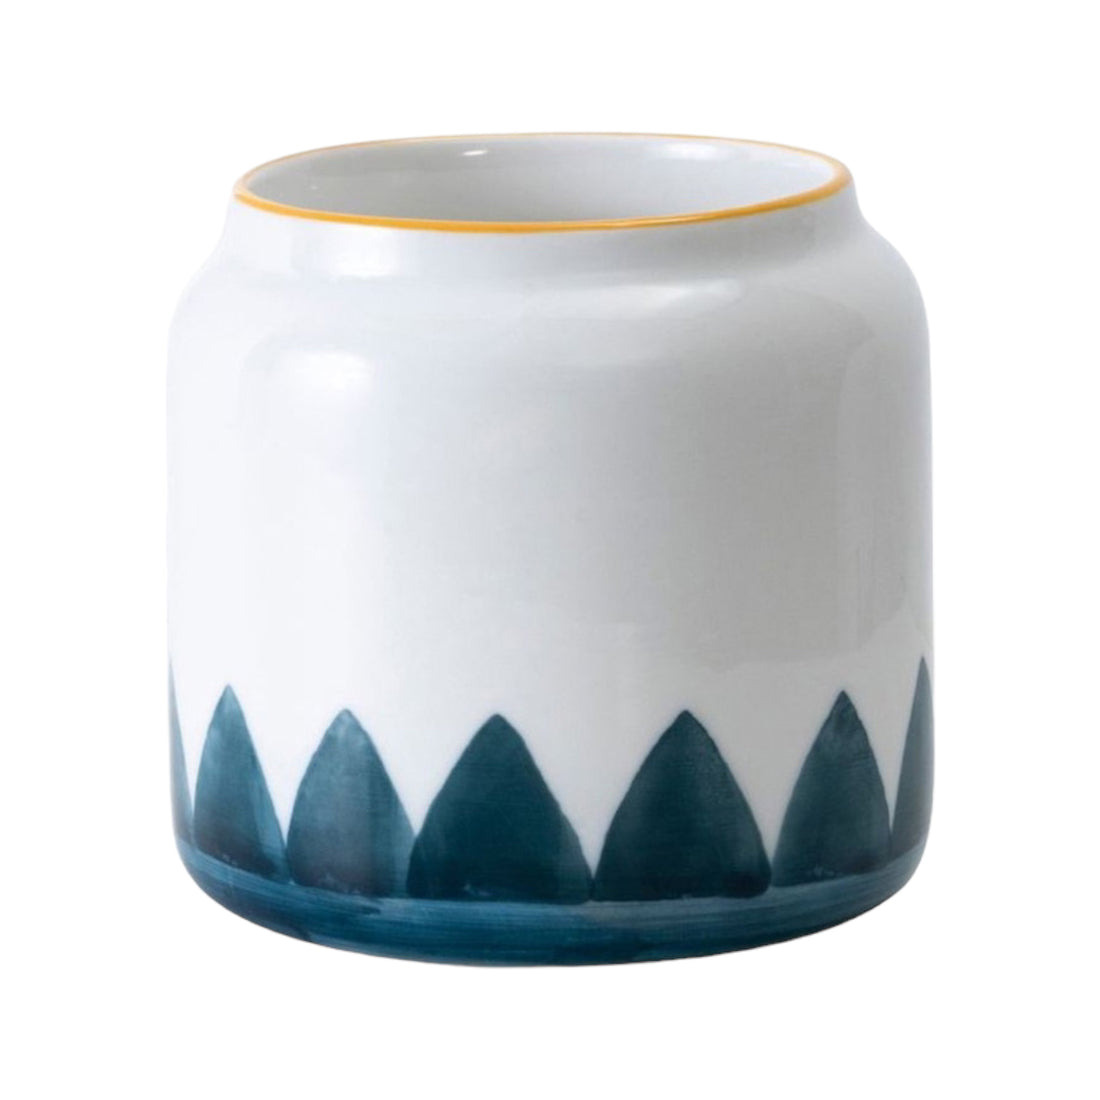 BROMMA Keramik-Blumentopf | Handbemalt mit blauen Akzenten | Ø 7cm